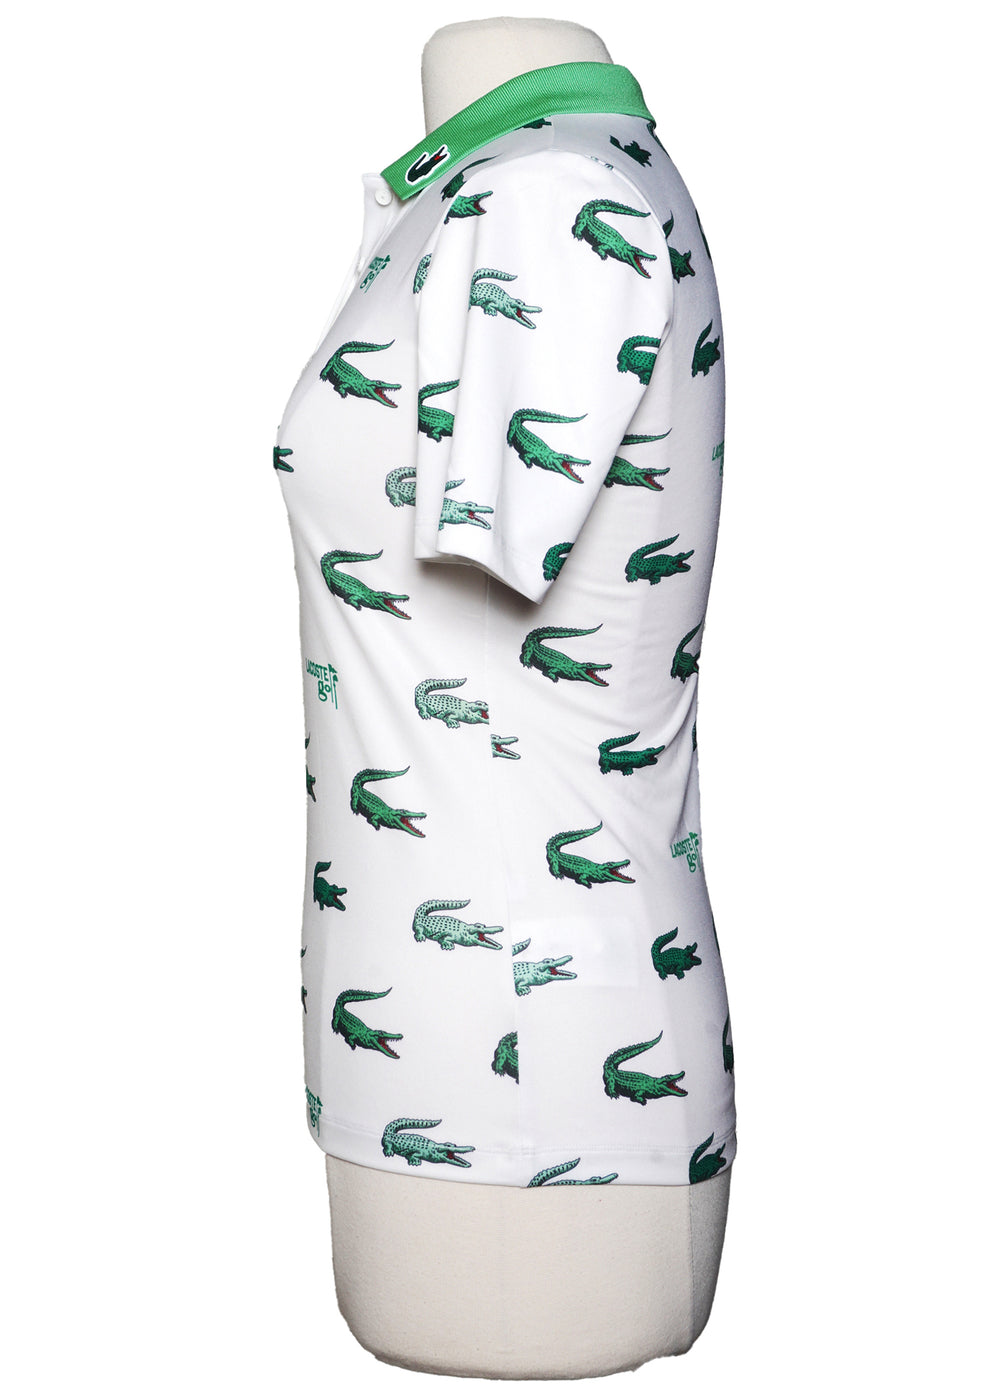 Lacoste Short Sleeve Polo - Croc Print - Size  34 (Small) - Skorzie